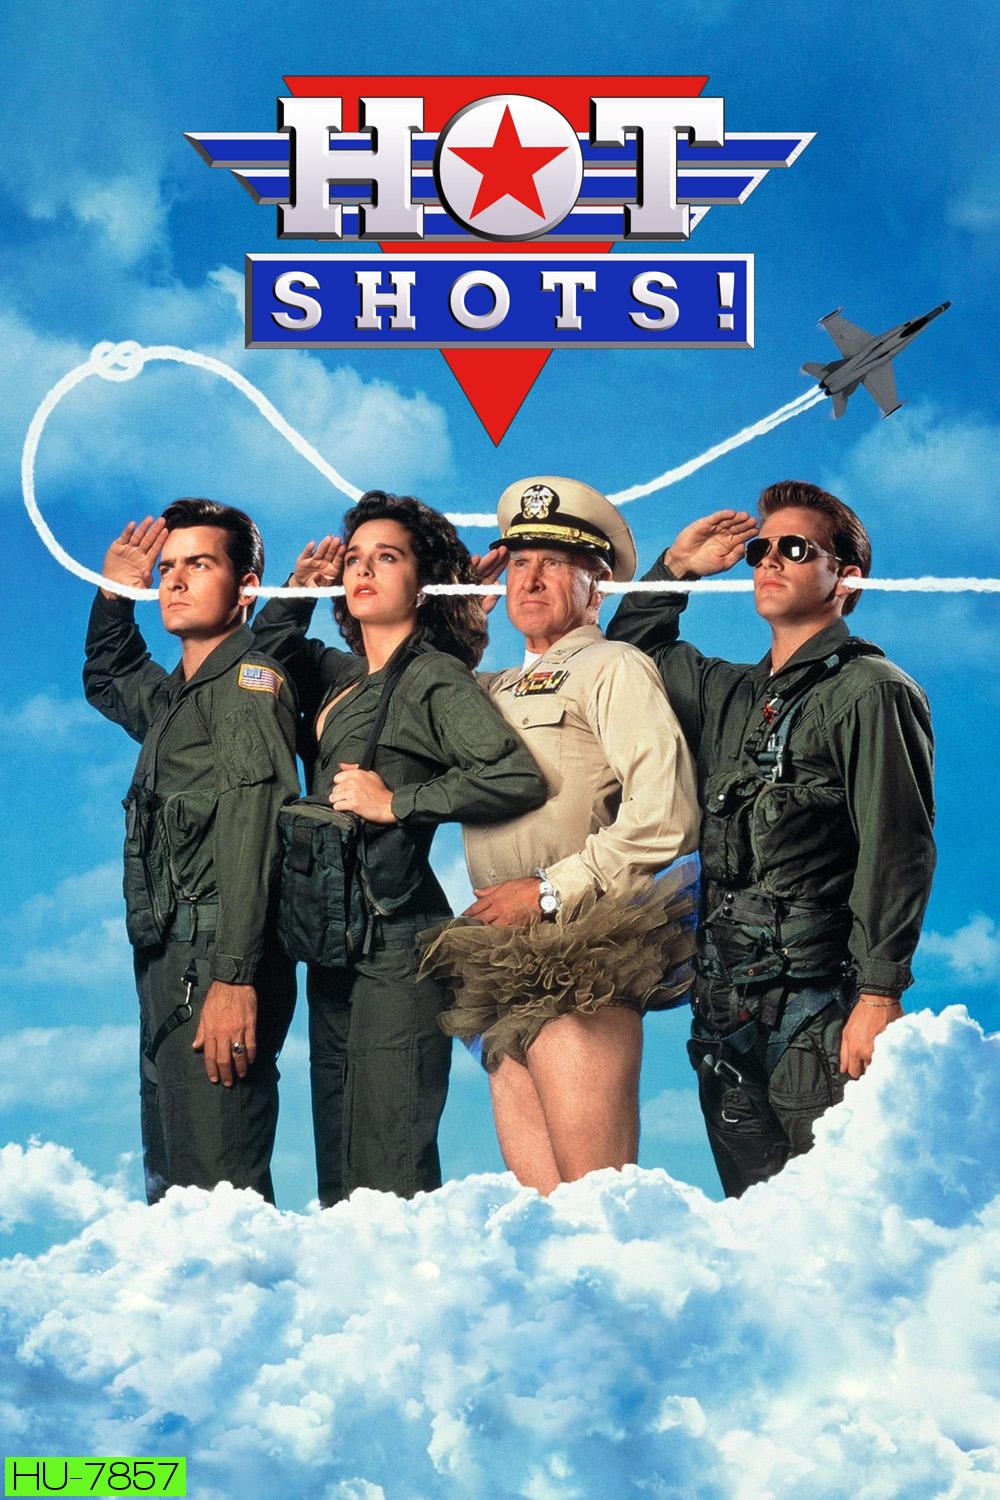 Hot Shots 1 ฮ็อตช็อต 1 เสืออากาศจิตป่วน (1991)